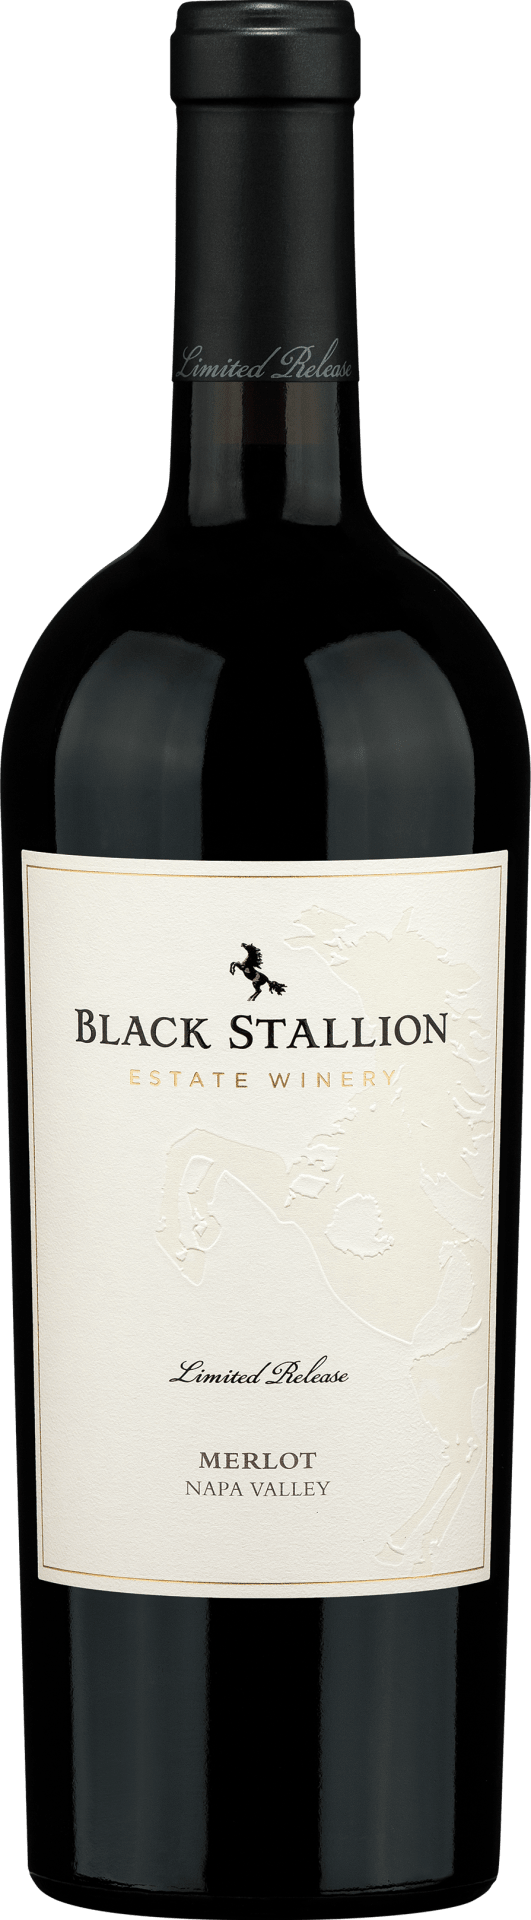 Black Stallion Limited Release